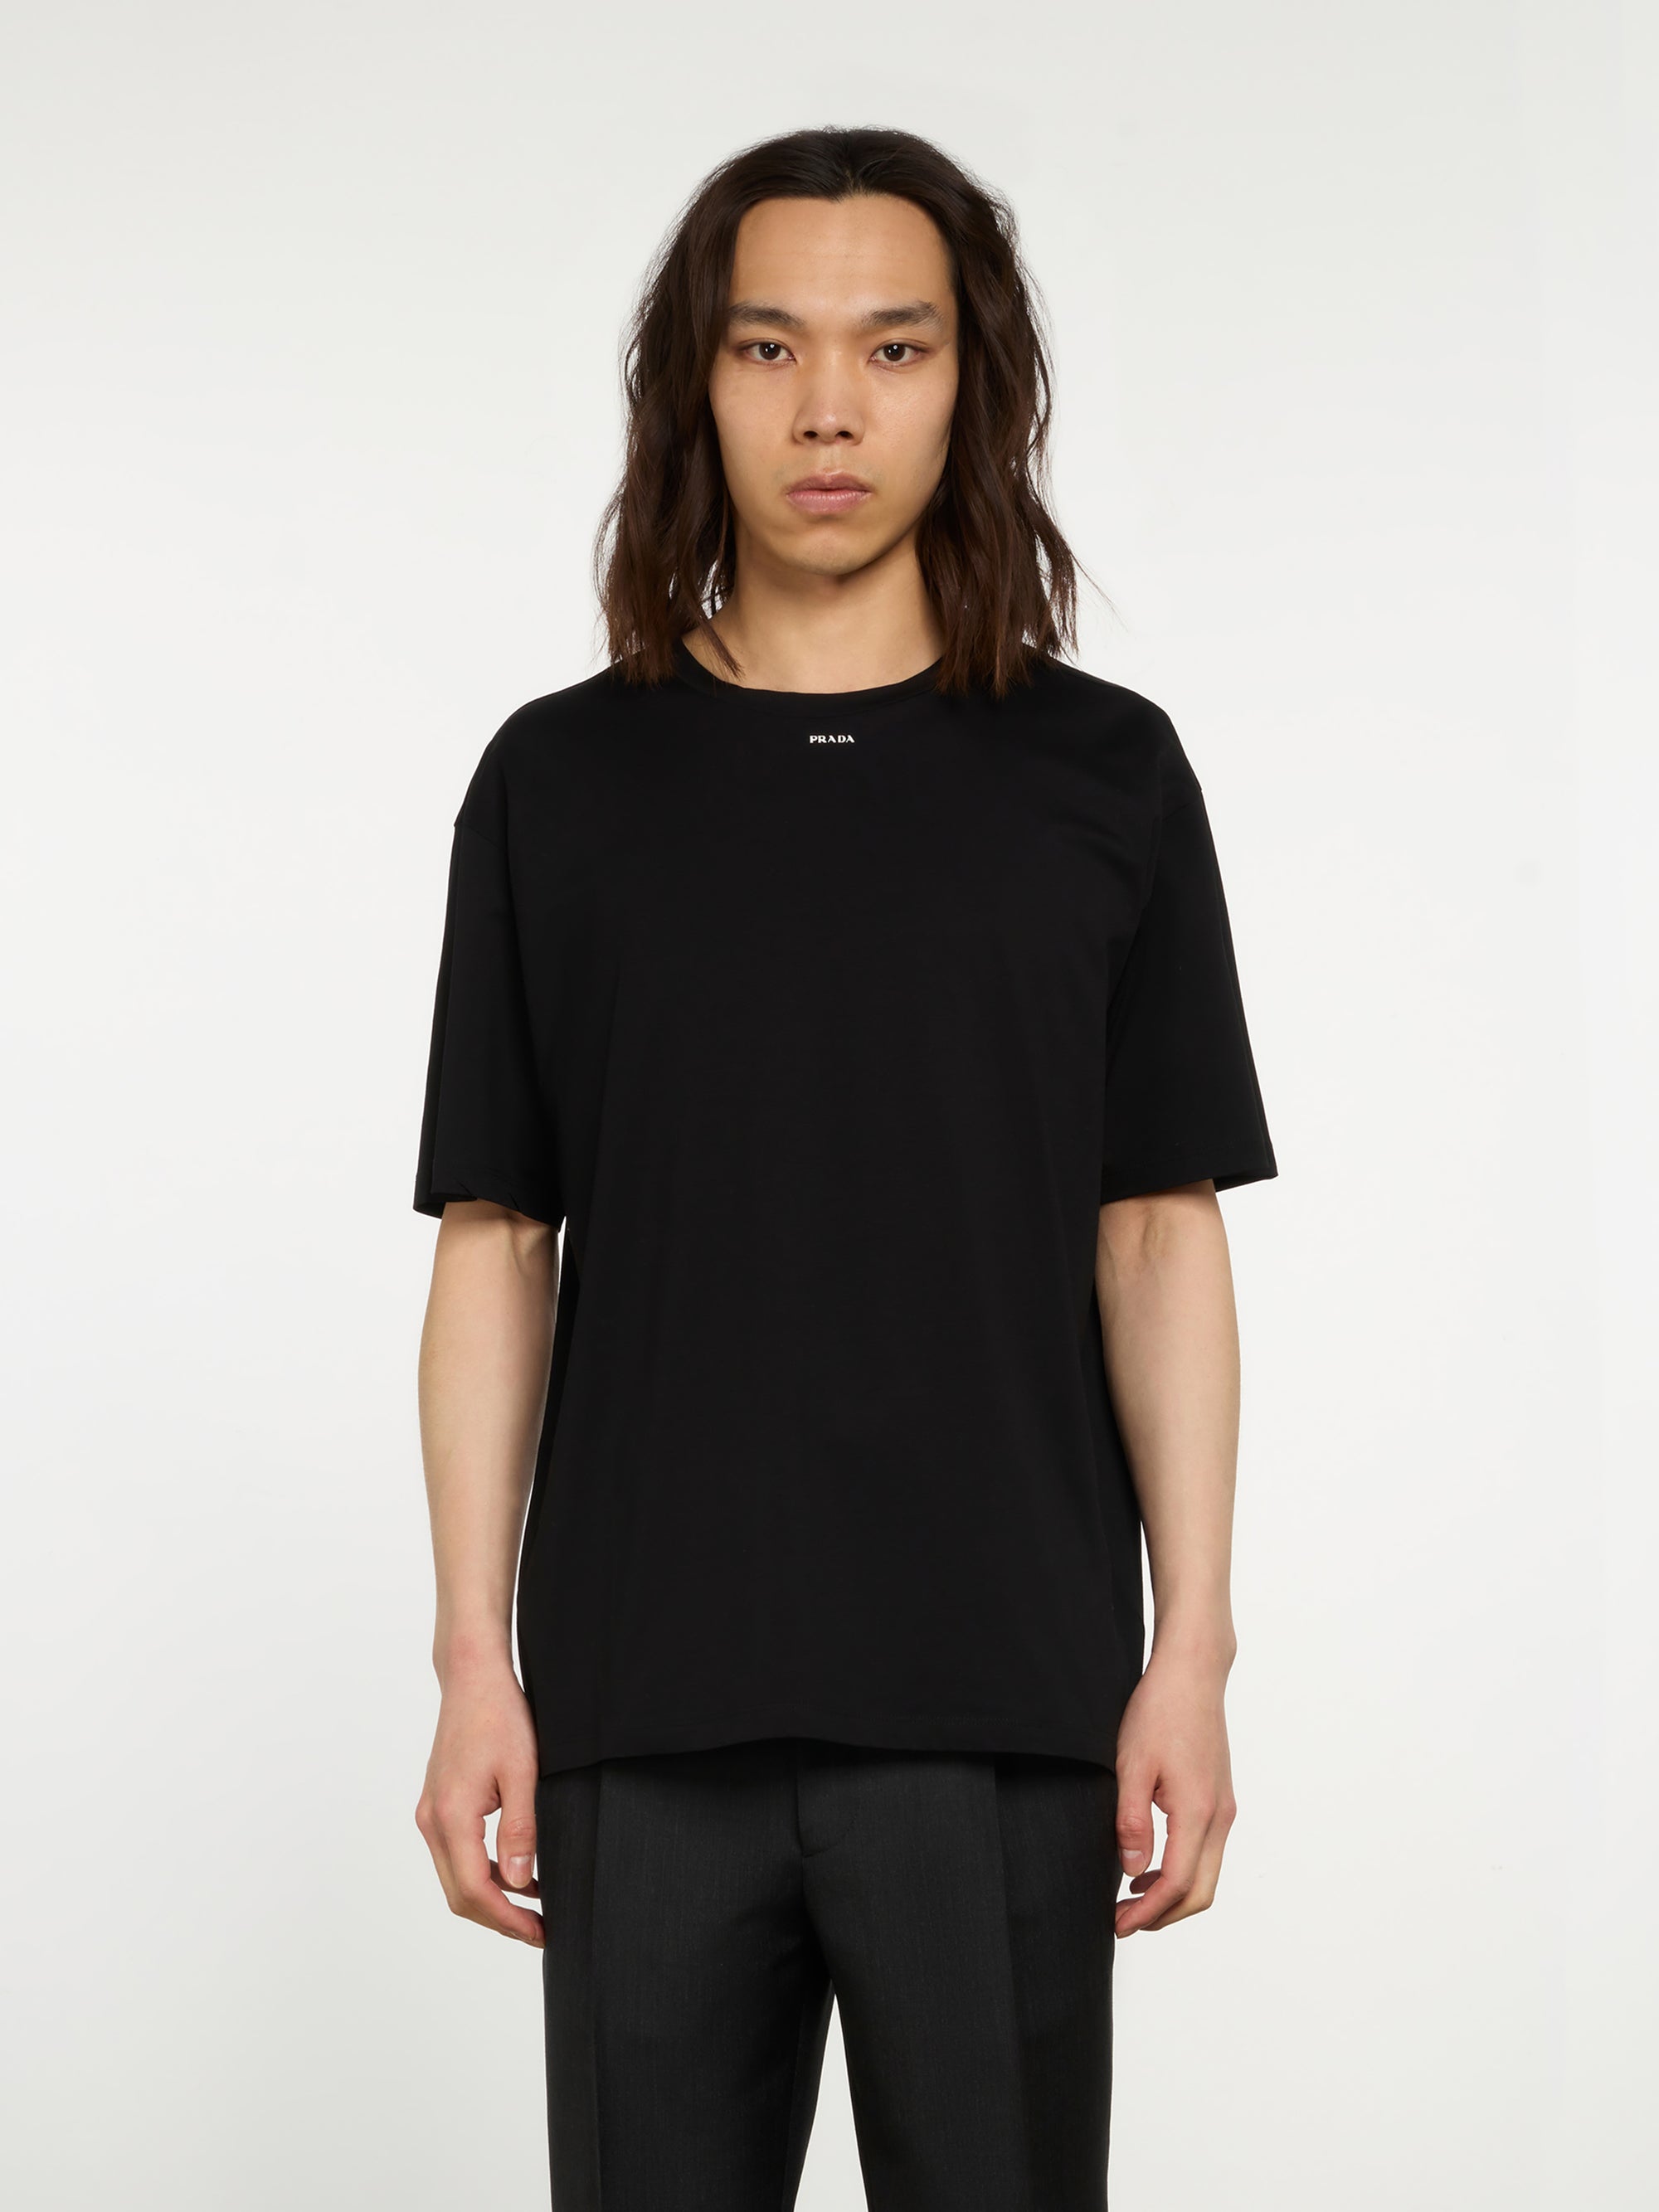 Prada - Men’s Cotton Logo T-Shirt - (Black) view 1